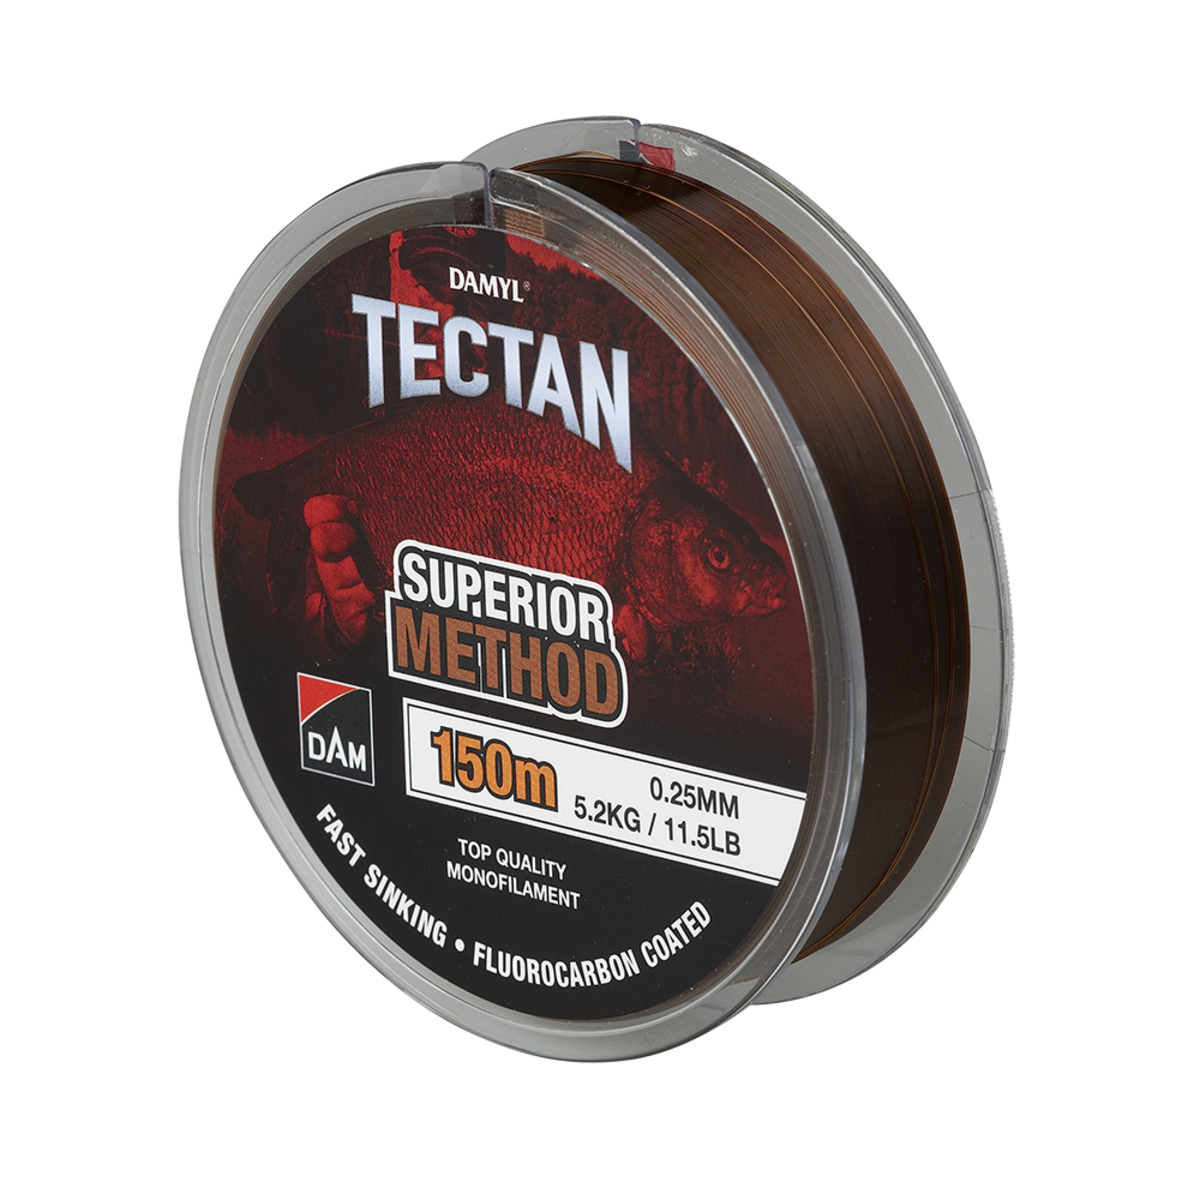 Dam Tectan Superior Fcc Method 150m - 0.23MM 4.2KG 9.2LBS BROWN